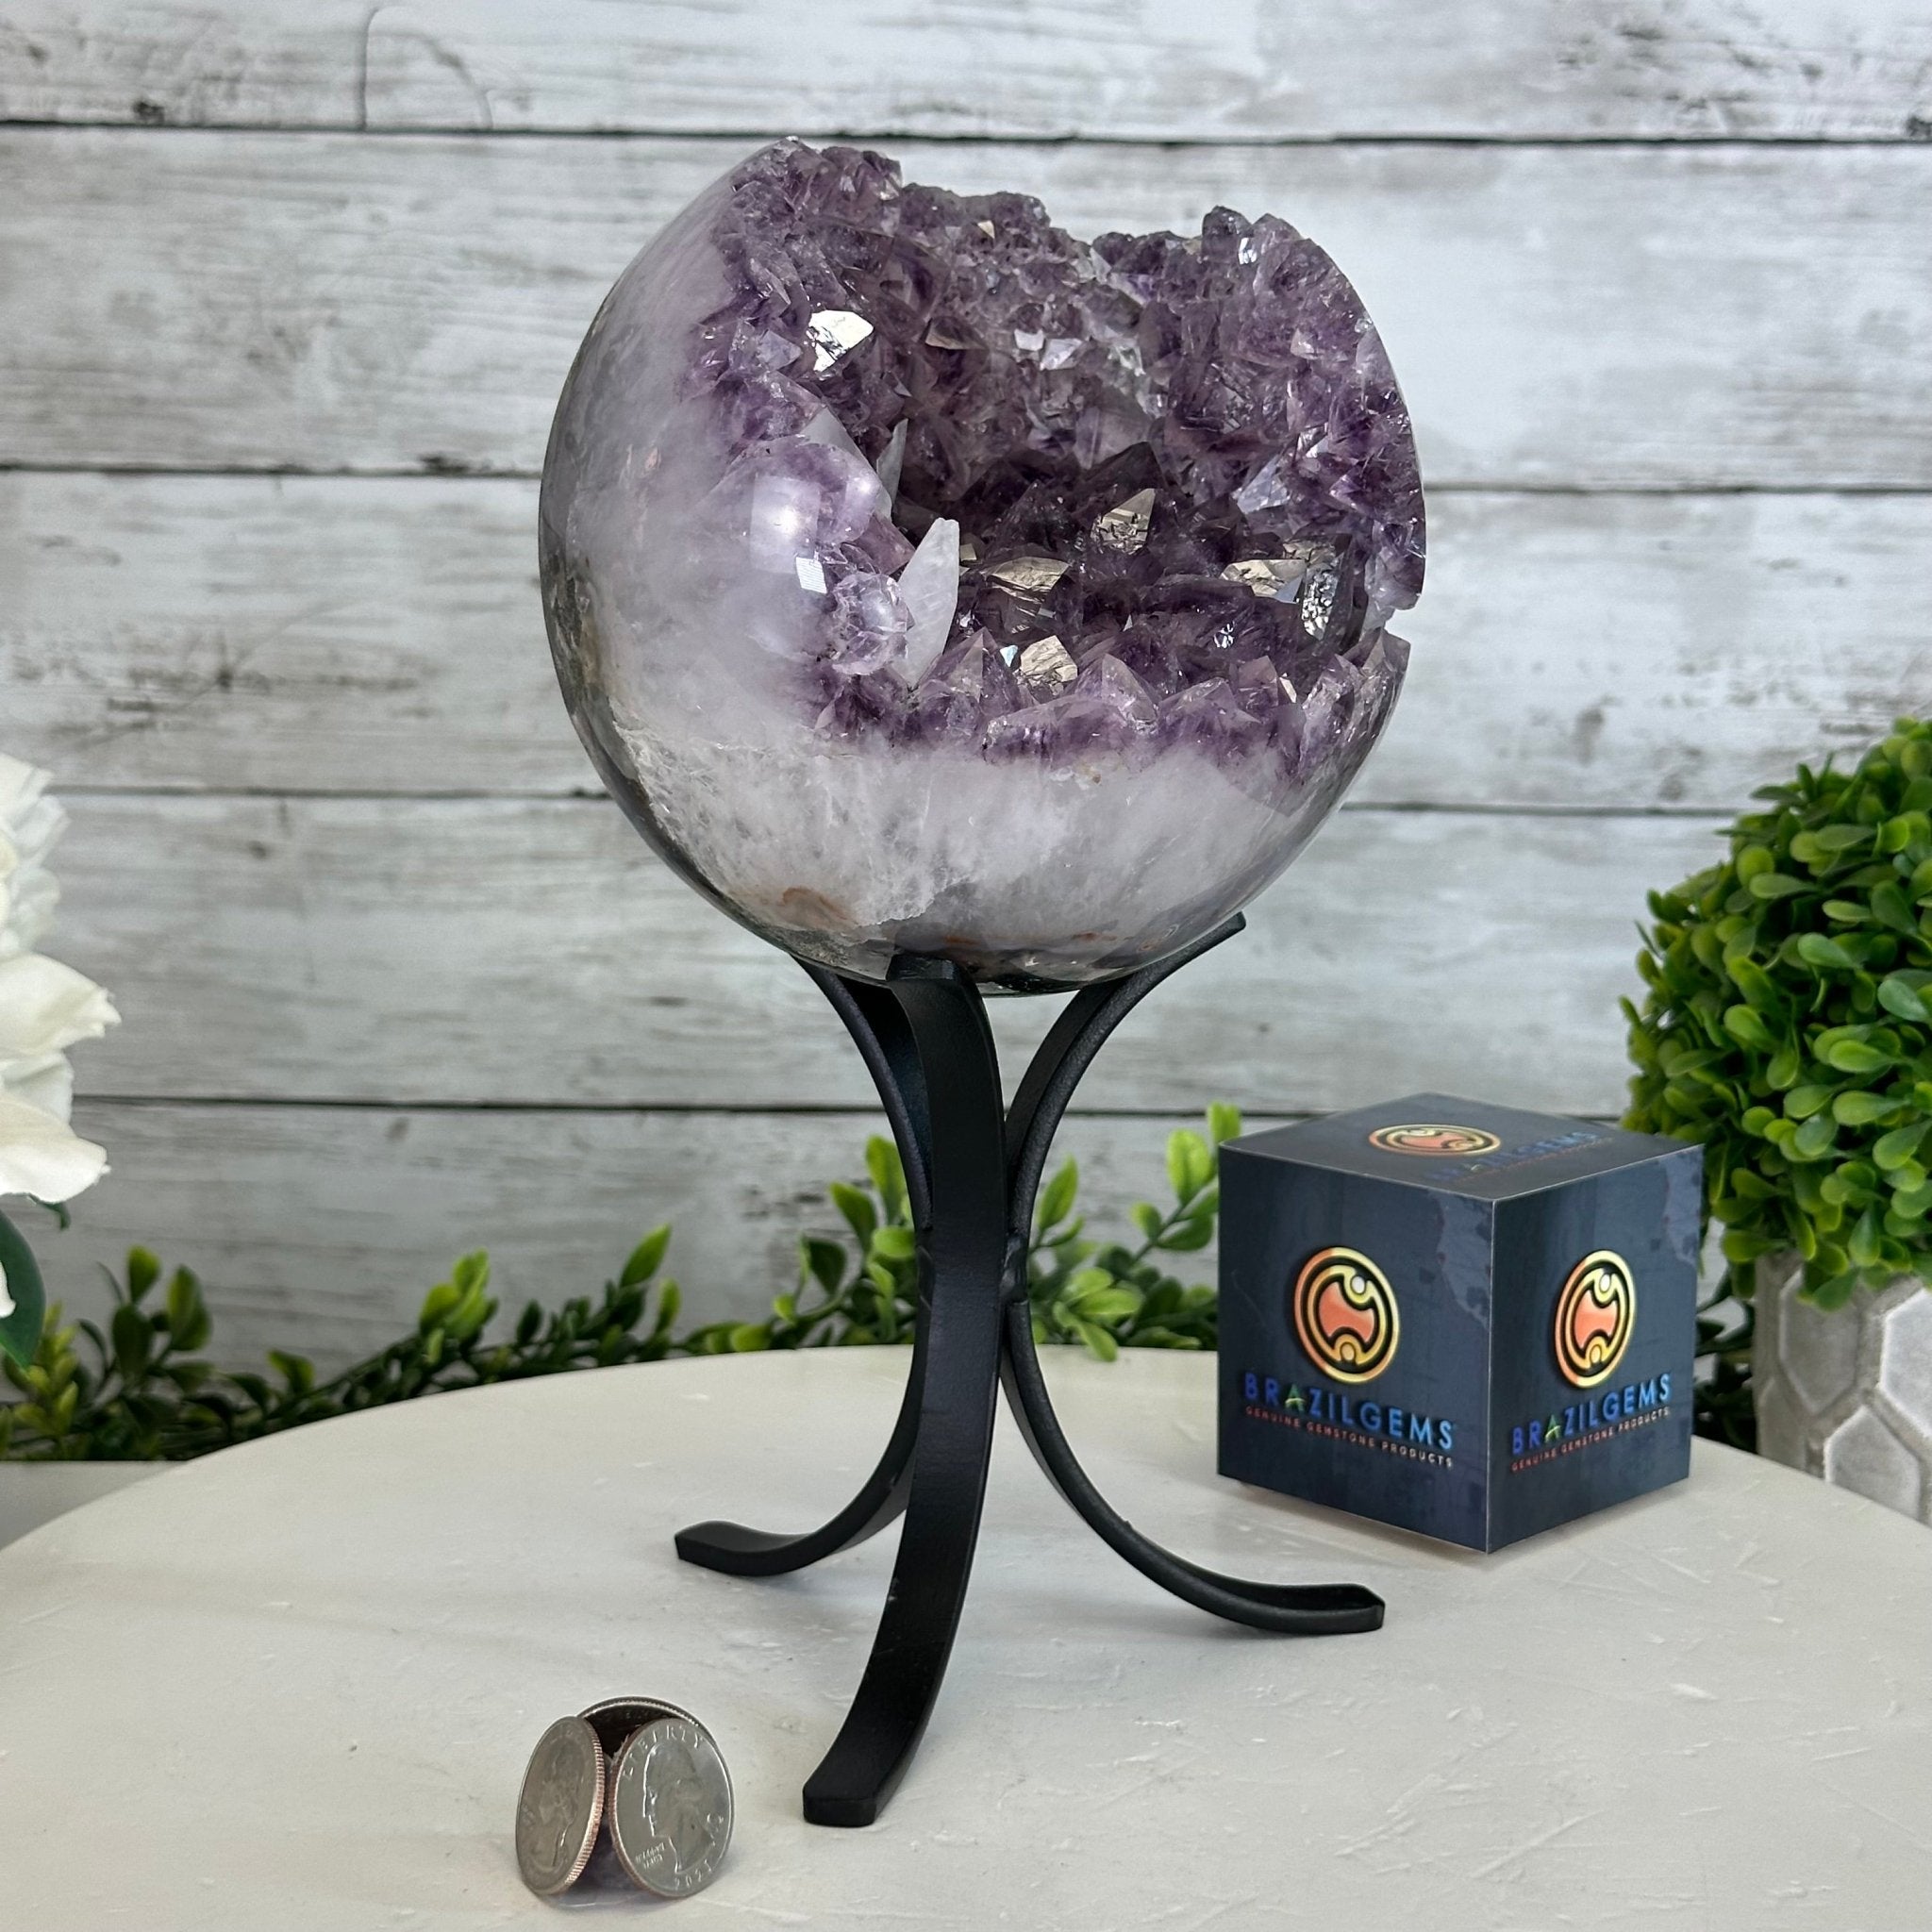 Druzy Amethyst Sphere on a Metal Stand, 5.6 lbs & 9.9" Tall #5630-0066 - Brazil GemsBrazil GemsDruzy Amethyst Sphere on a Metal Stand, 5.6 lbs & 9.9" Tall #5630-0066Spheres5630-0066